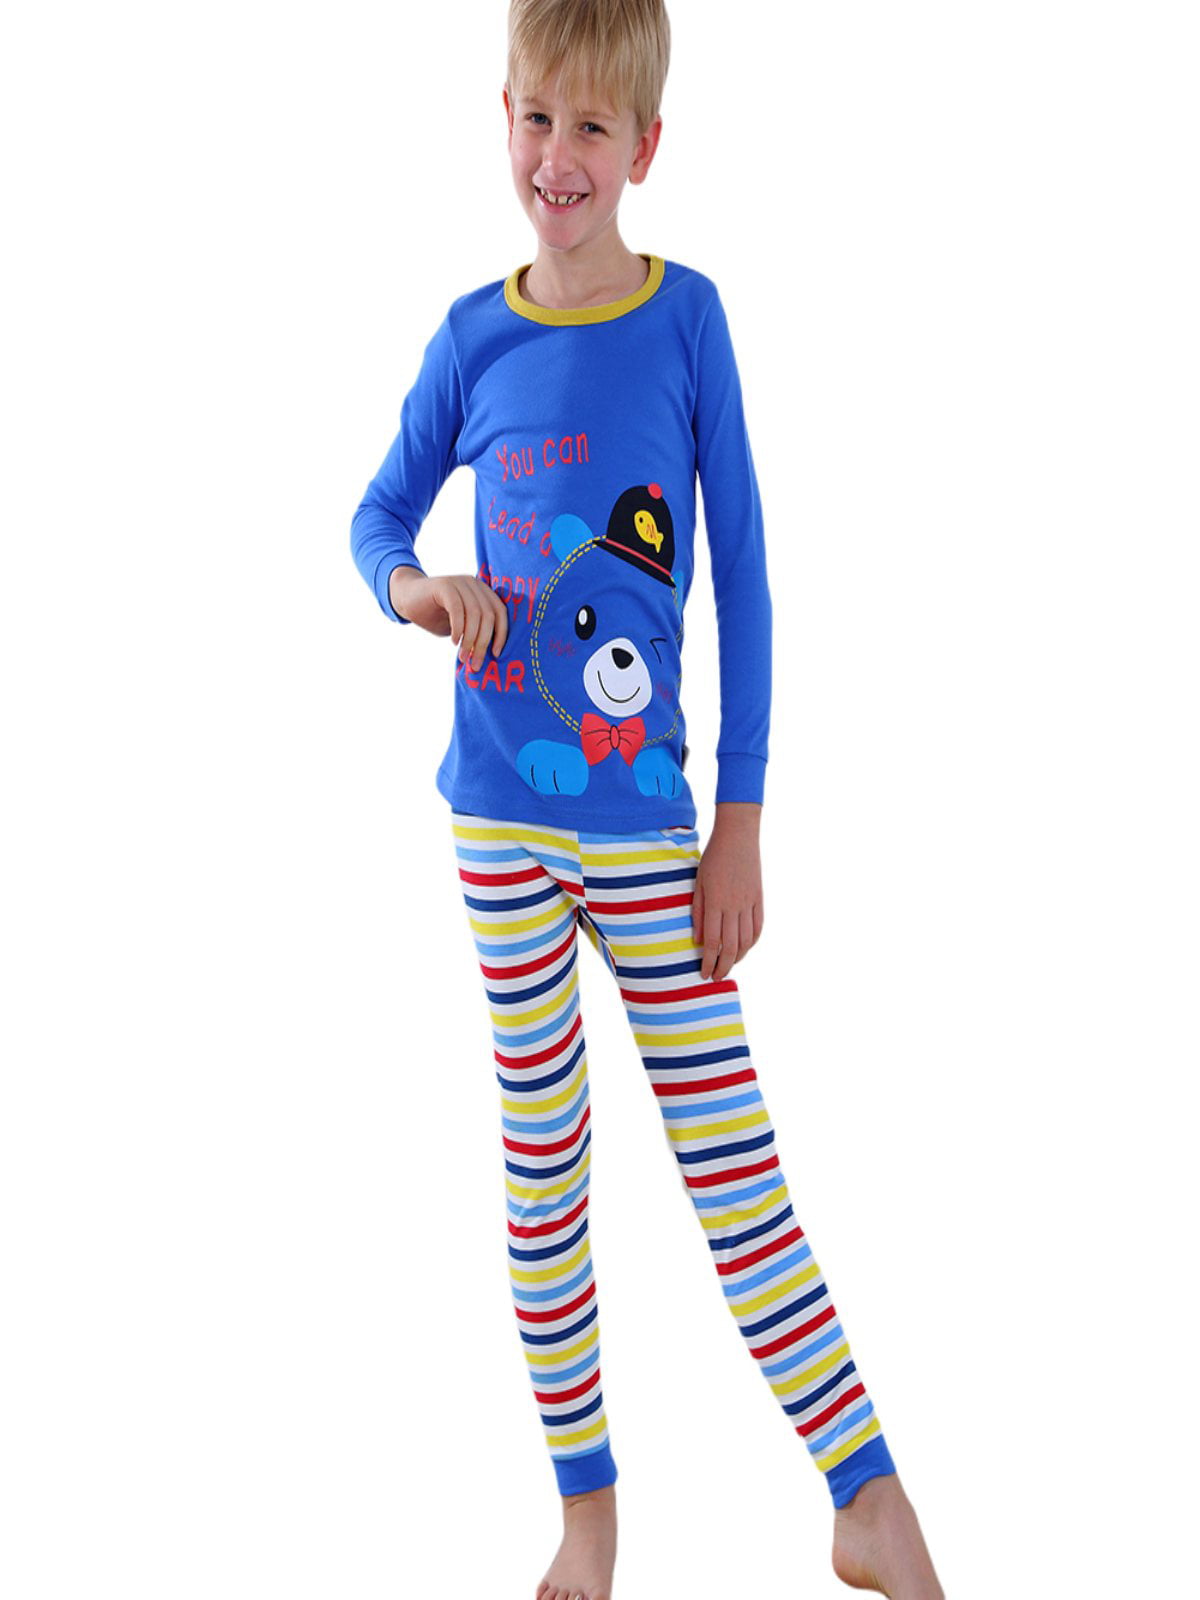 CAOMP Girls Pajamas Organic Cotton Pjs for Children Sleepwear Kids 2 Pieces Set 